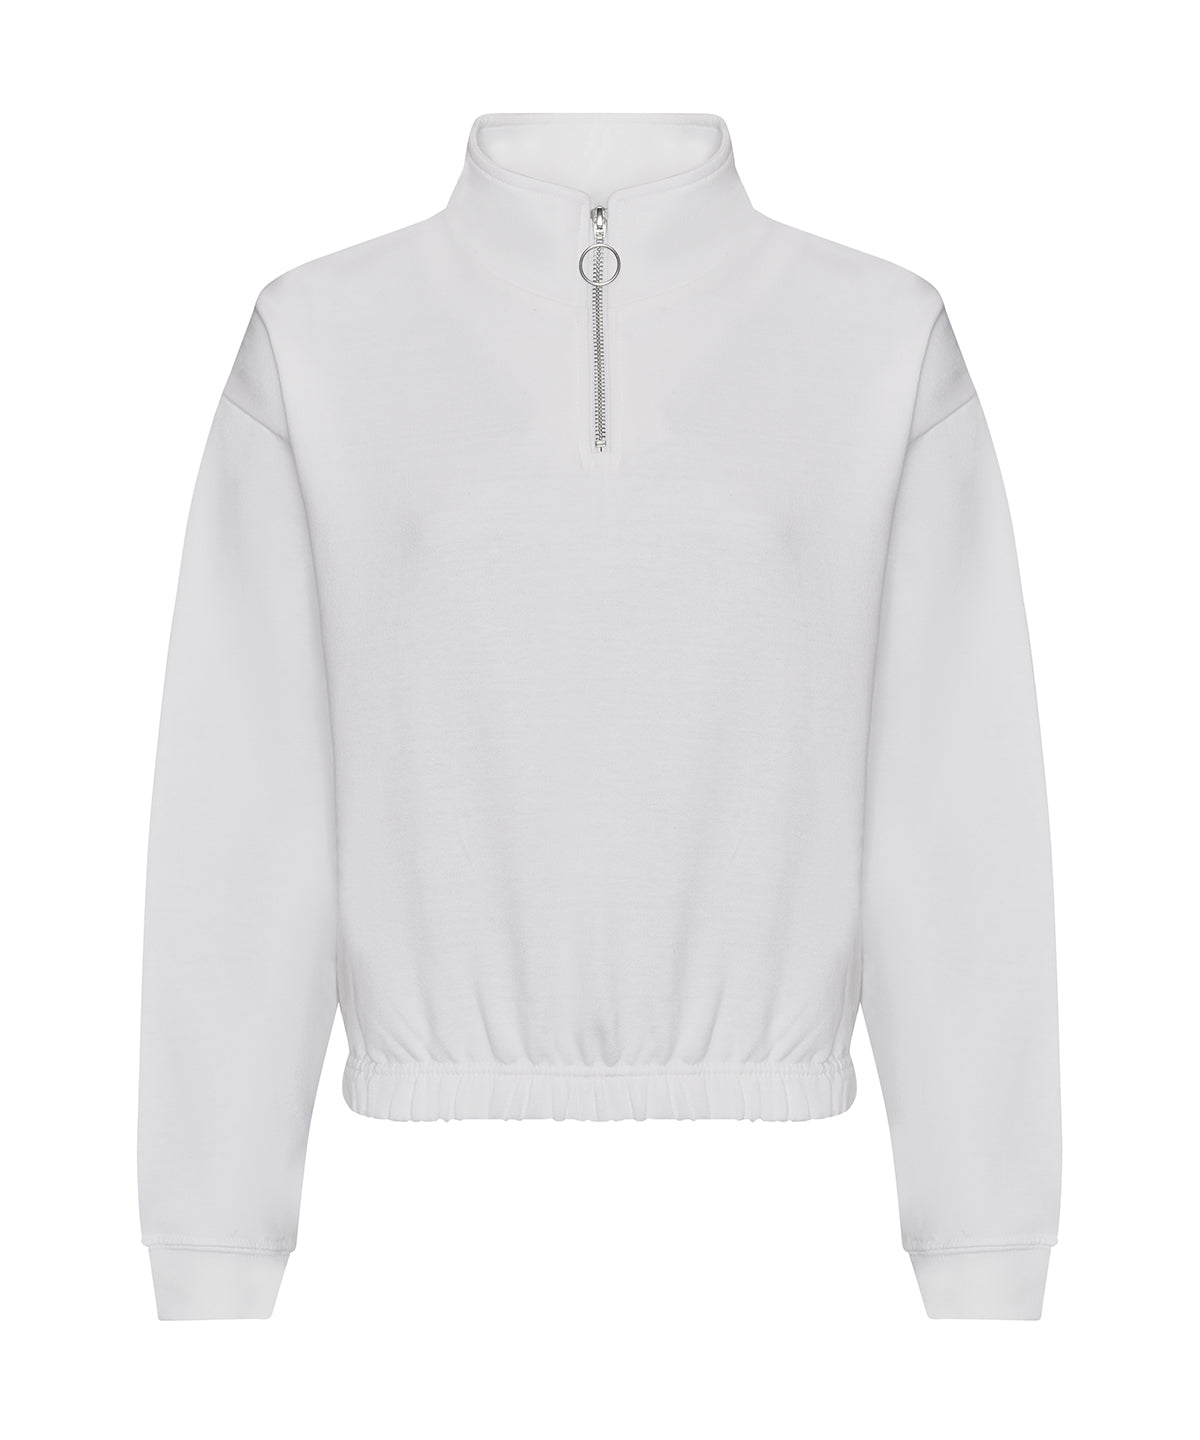 Personalised Sweatshirts - White AWDis Just Hoods Women's cropped ¼-zip sweat